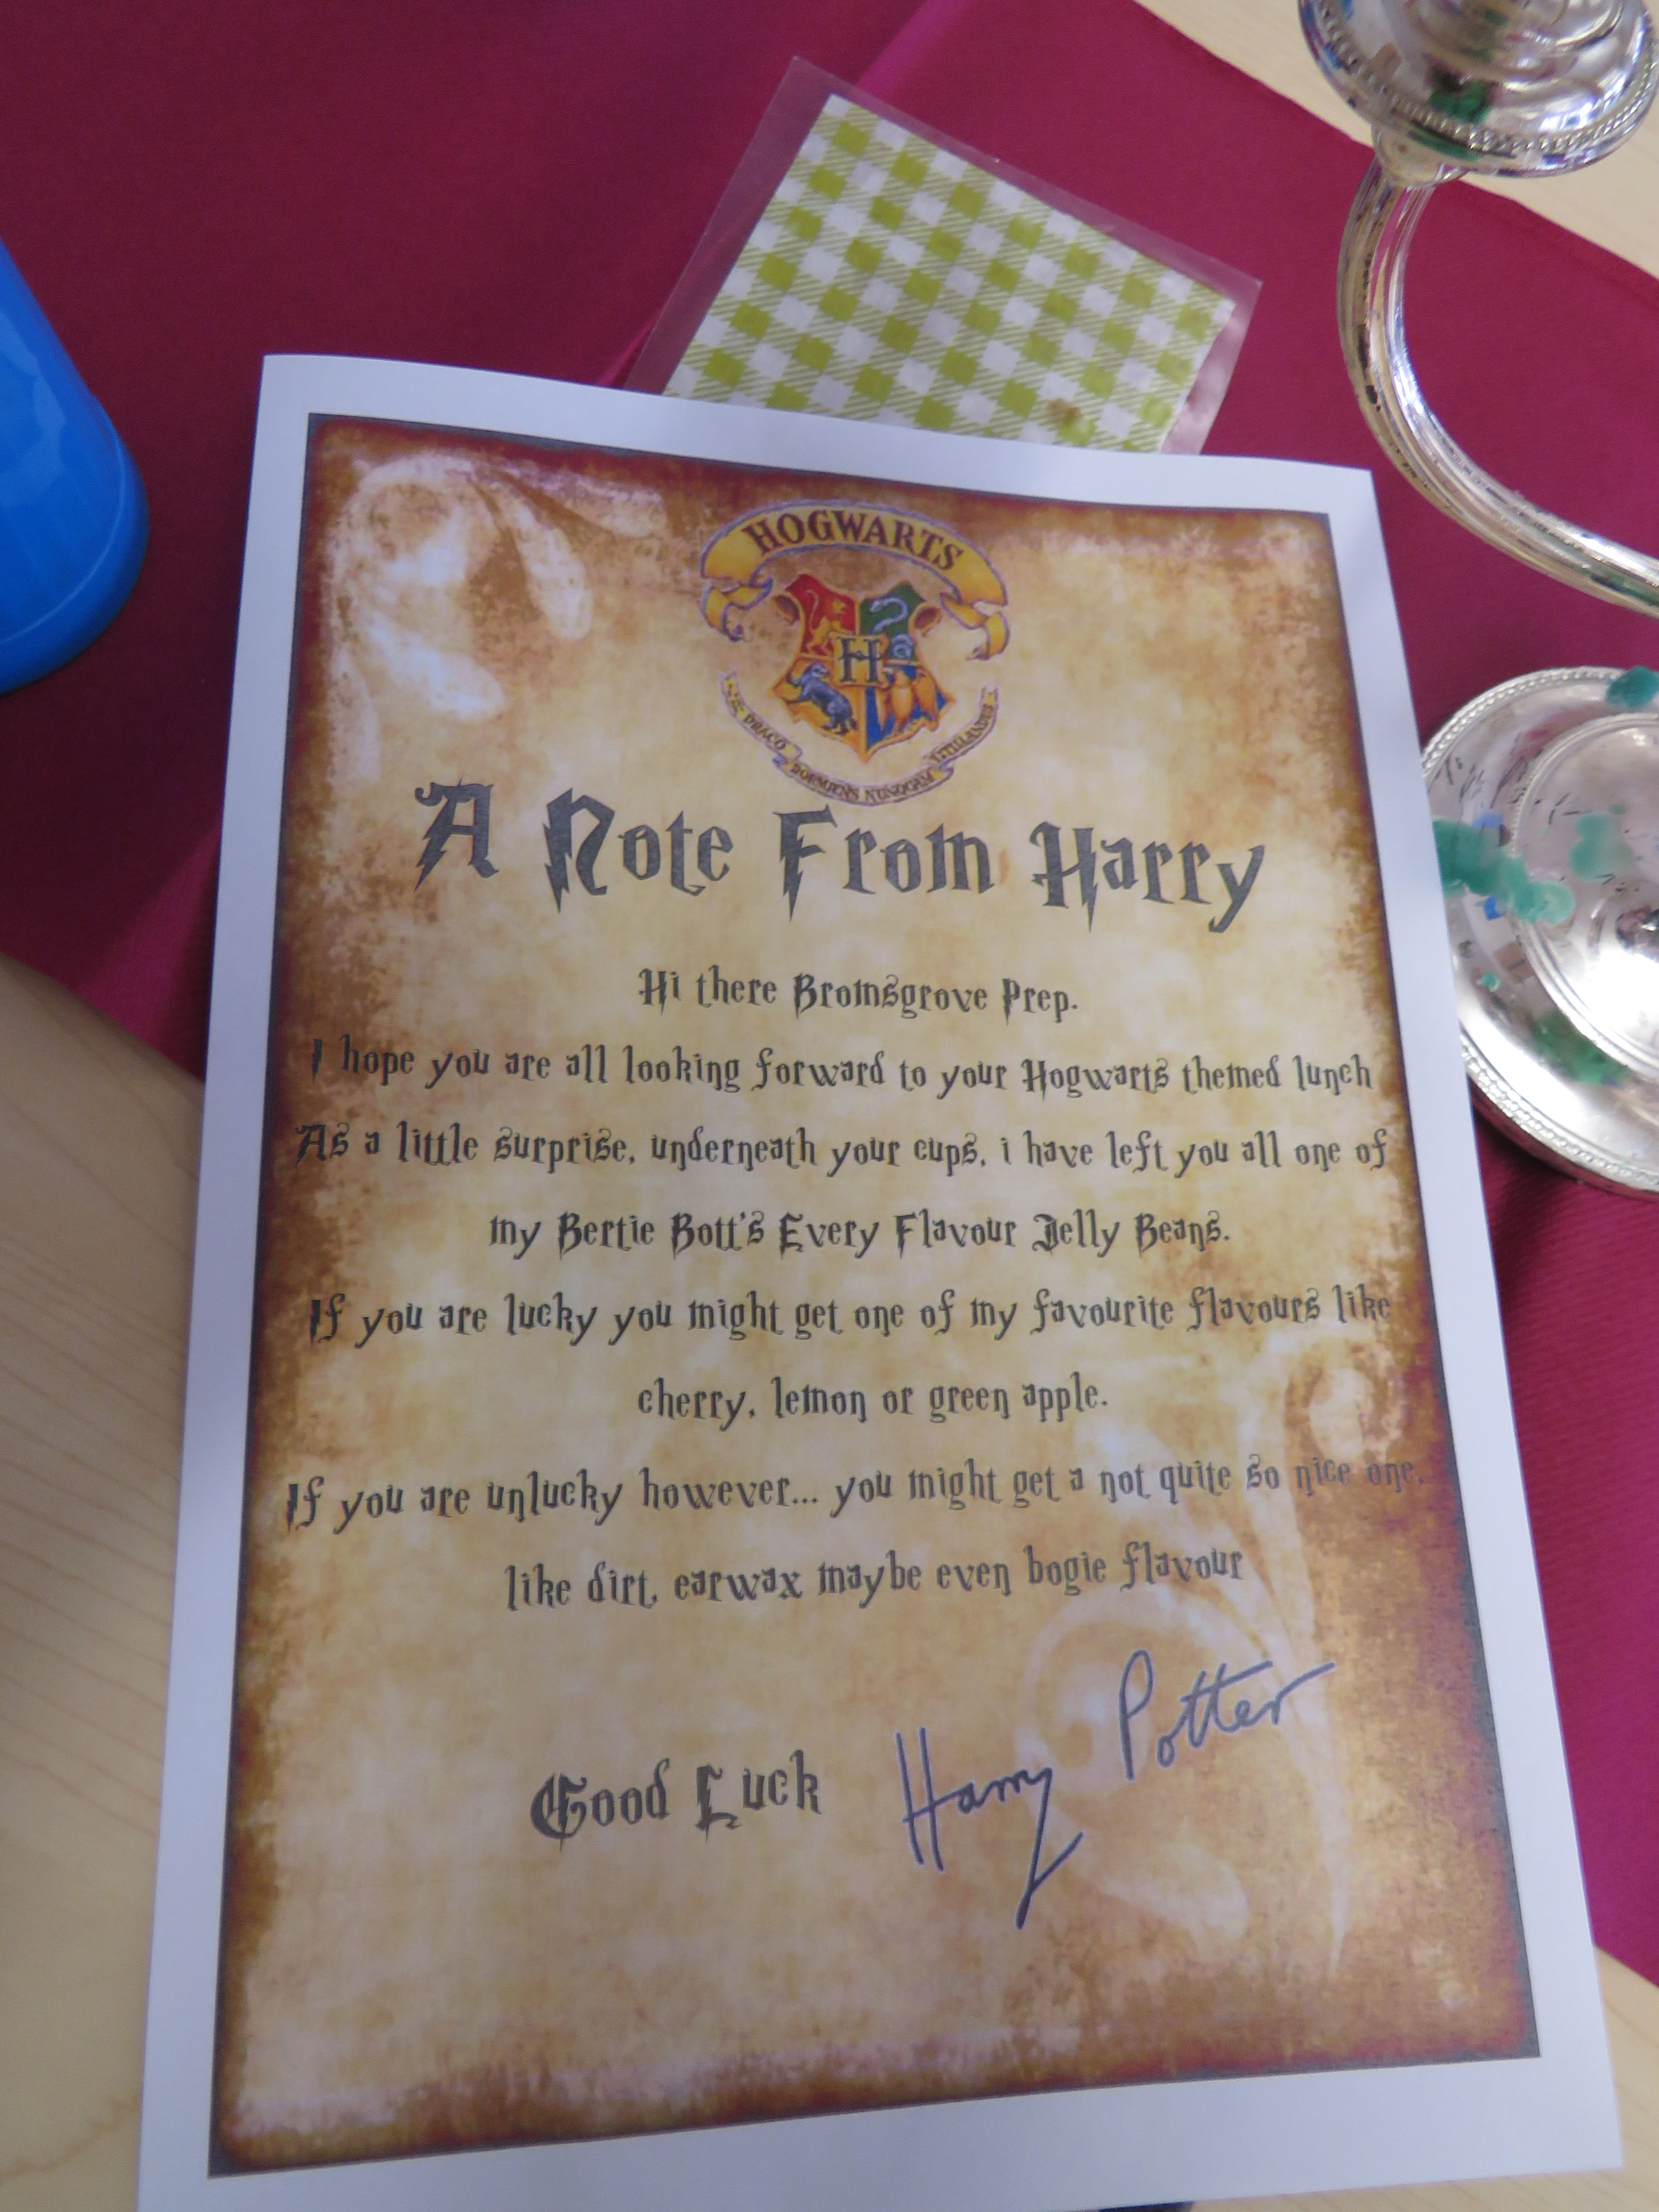 Harry Potter Day at Bromsgrove Prep School, 20th June 2017